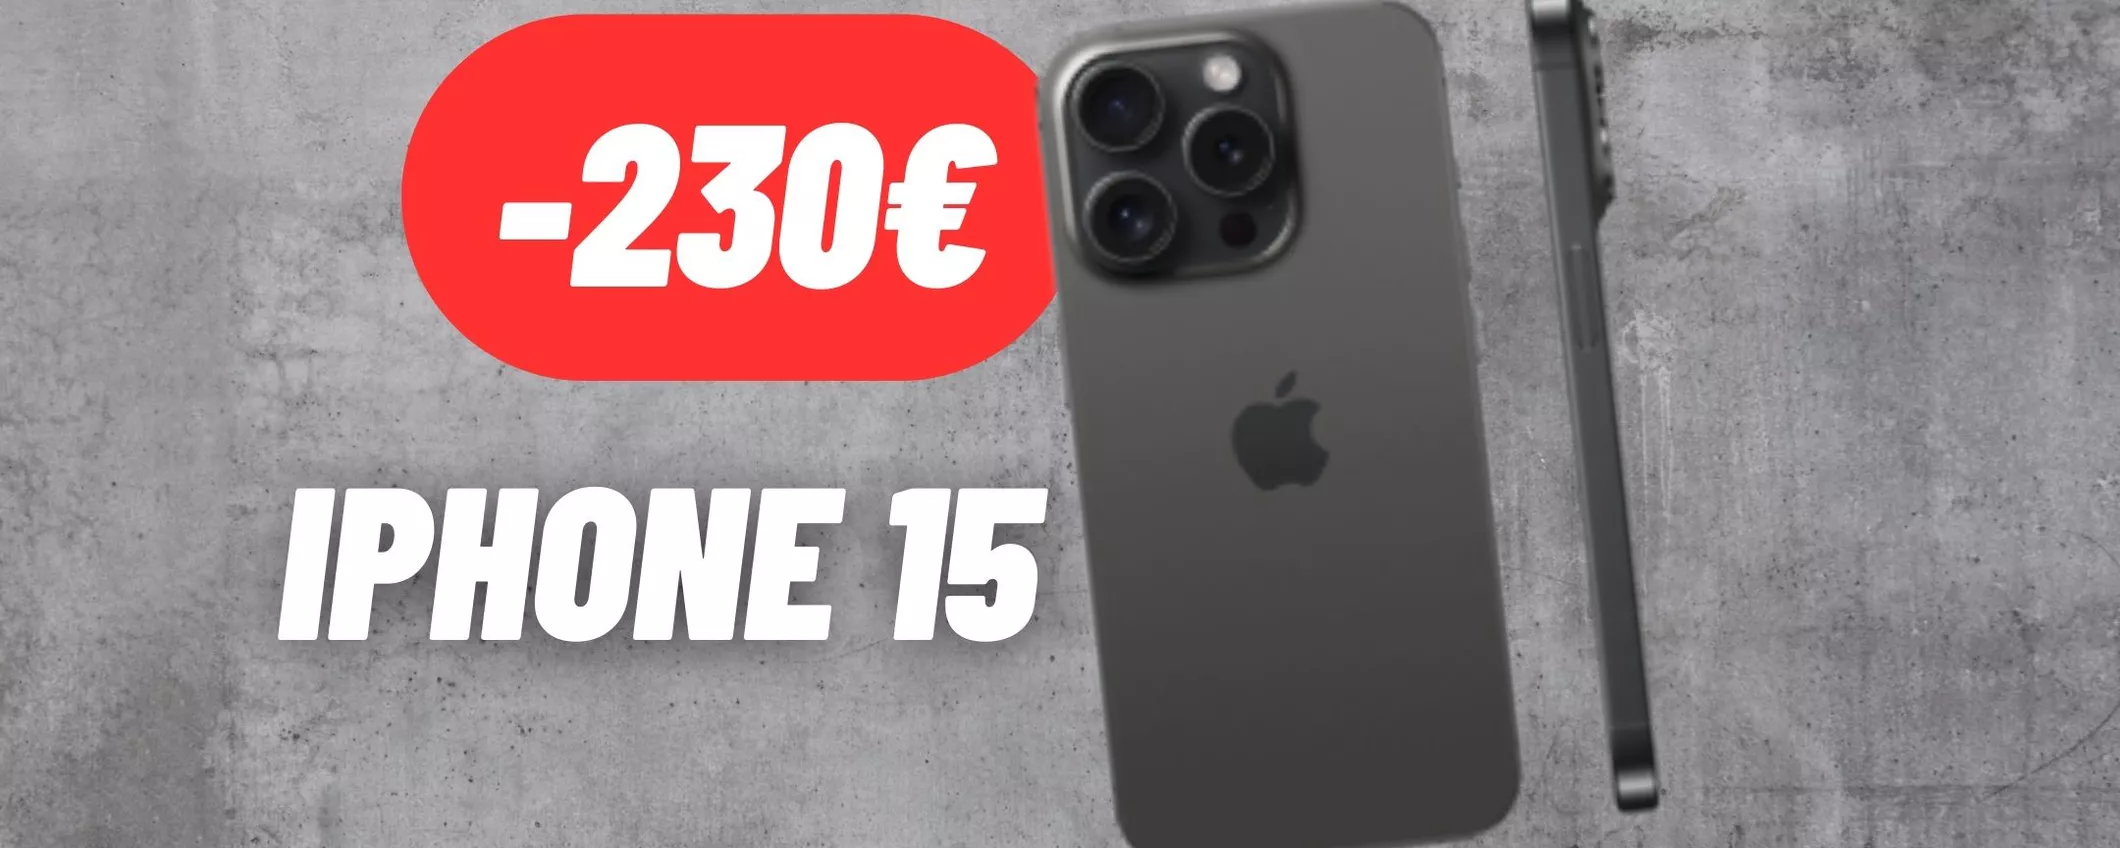 230€ RISPARMIATI per l'iPhone 15: offertissima Amazon